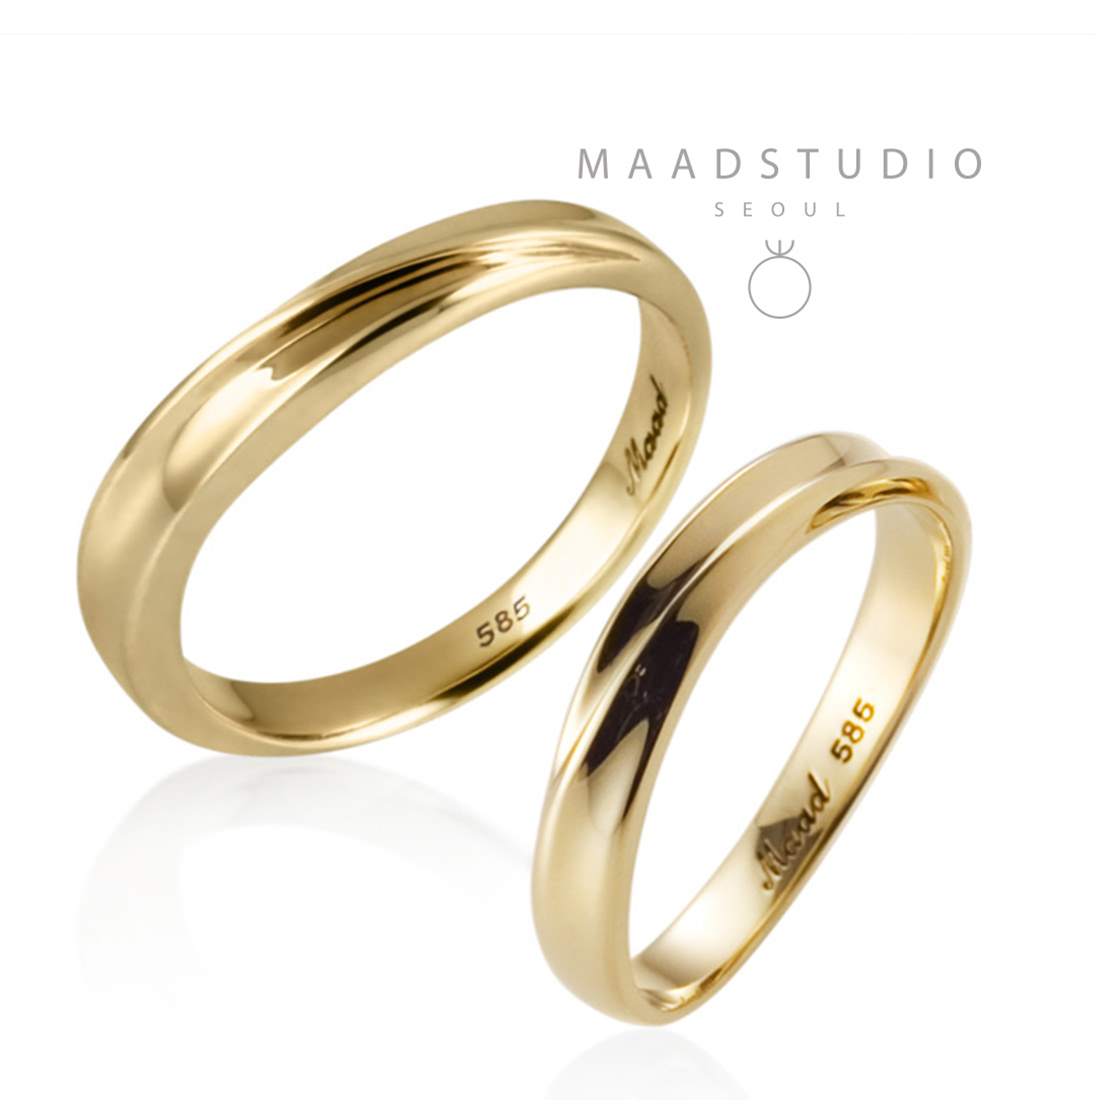 Infinity II wedding ring Set (M&S) 14k gold